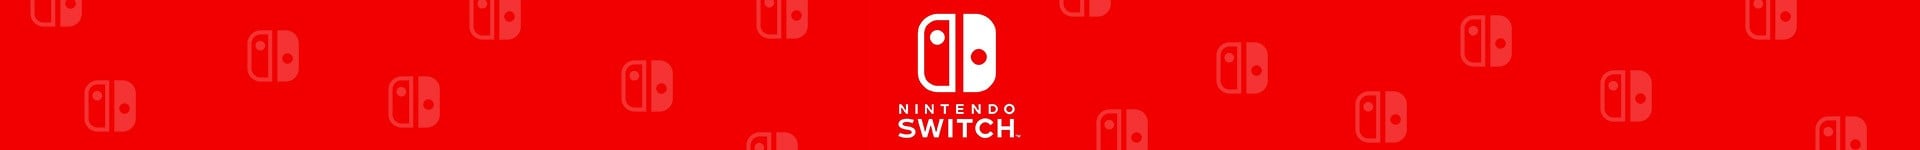 Nintendo Switch konsoller